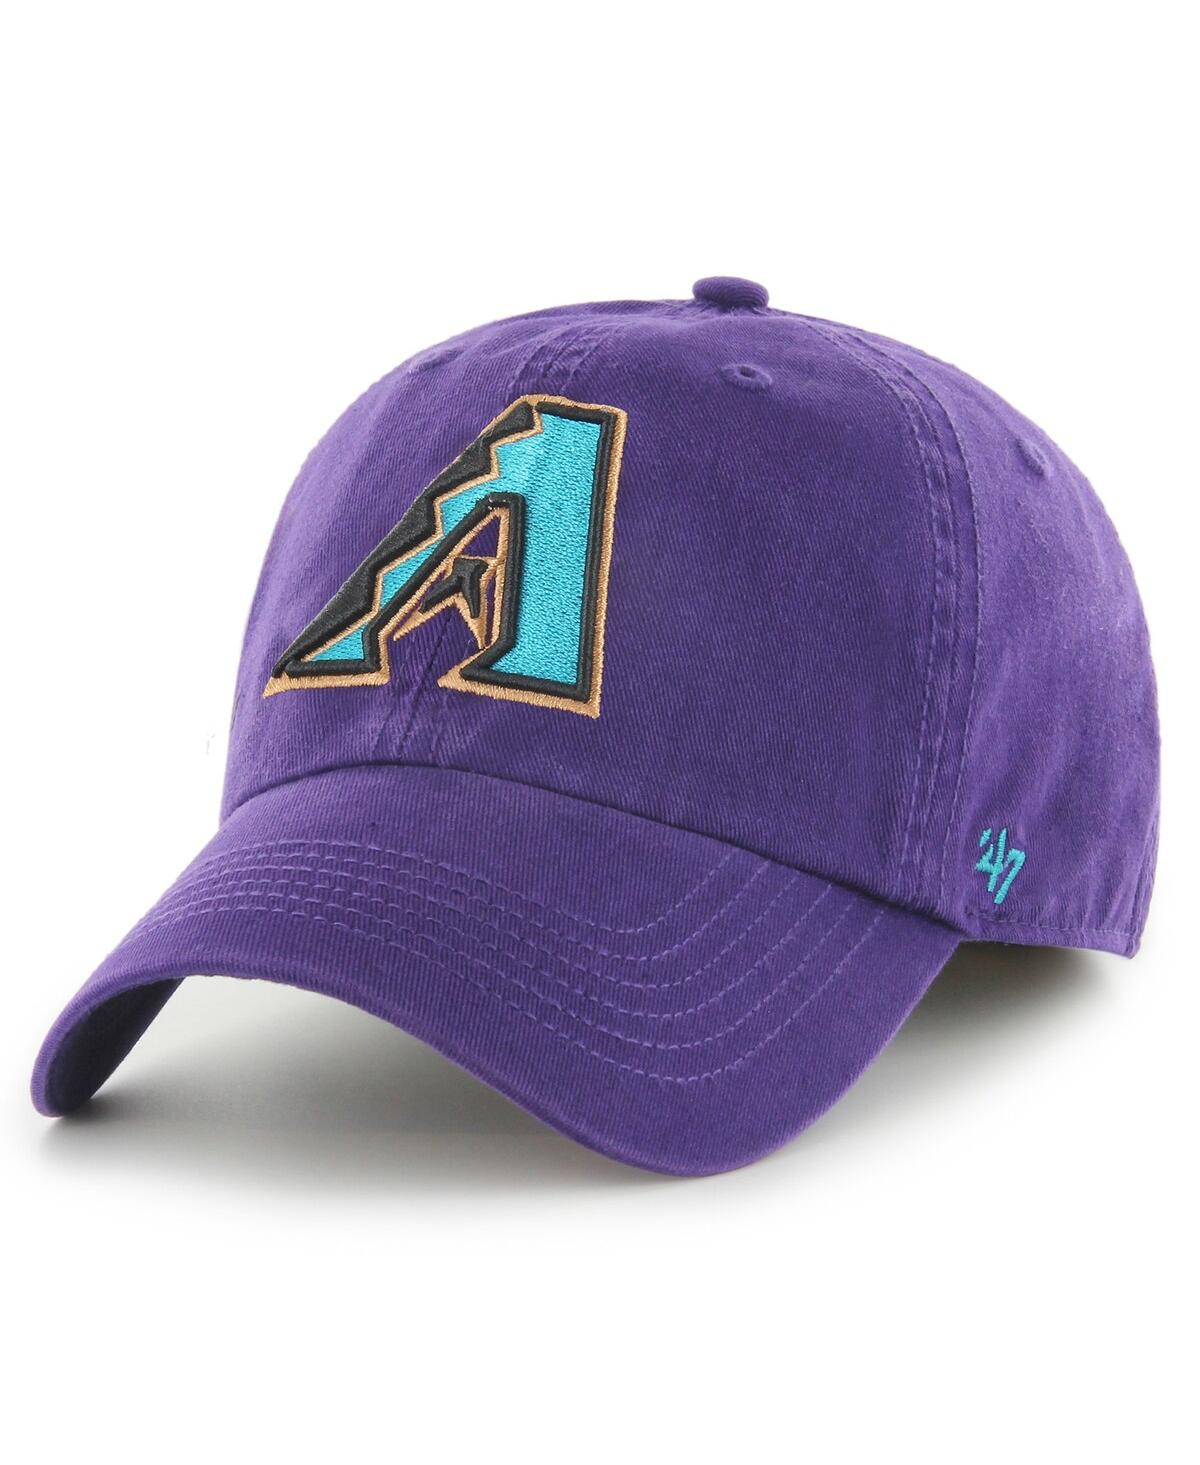 Men's '47 Brand Purple Arizona Diamondbacks Cooperstown Collection Franchise Fitted Hat - Purple